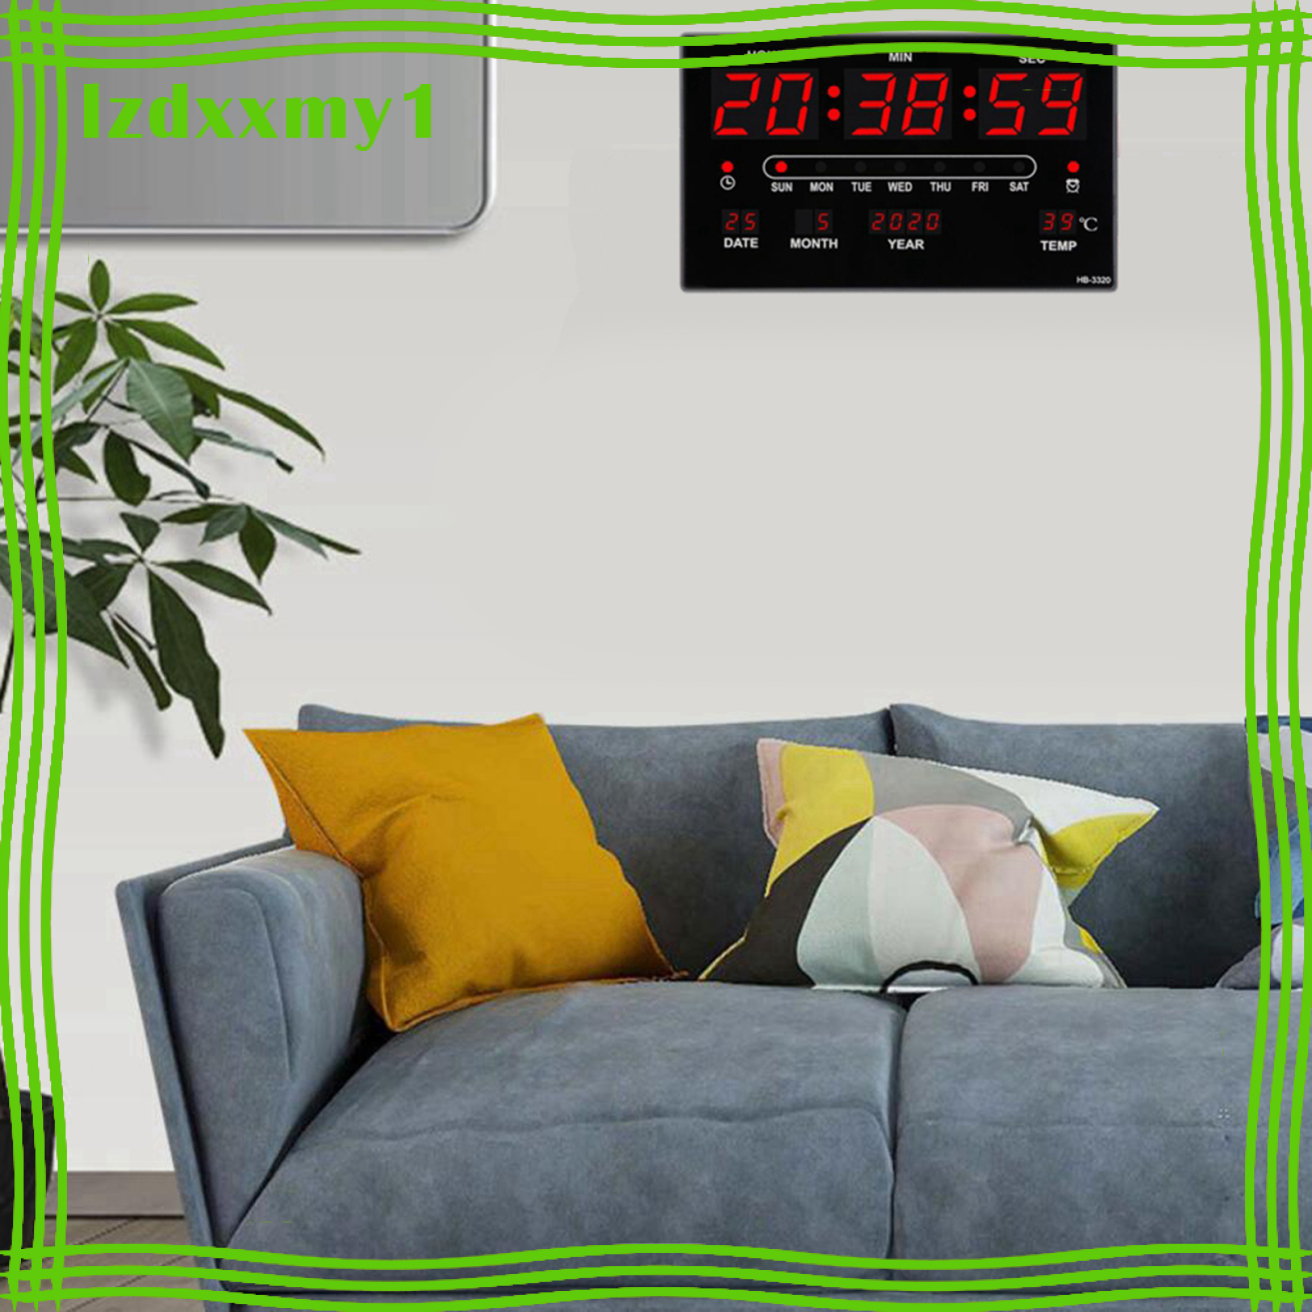 Kiddy USB LED Digital Wall Clock Temperature Humidity Display Home Office Clocks